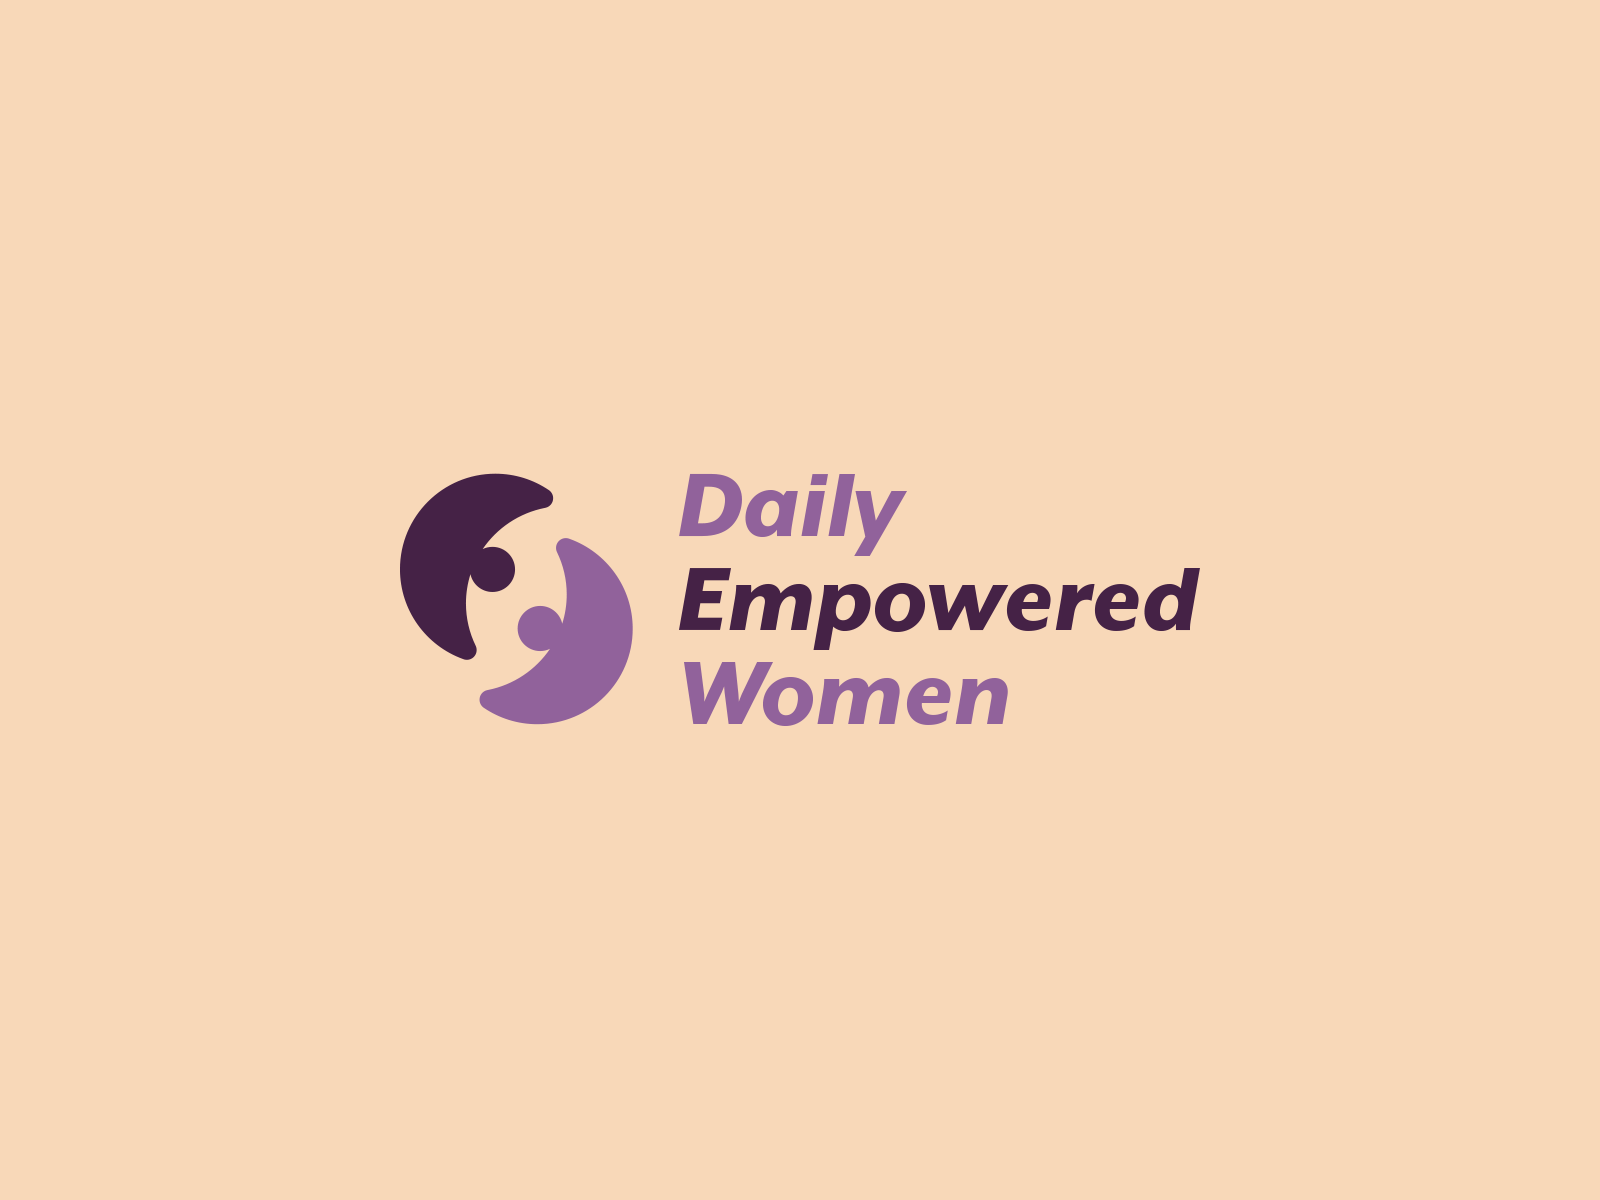 Daily Empowered Women